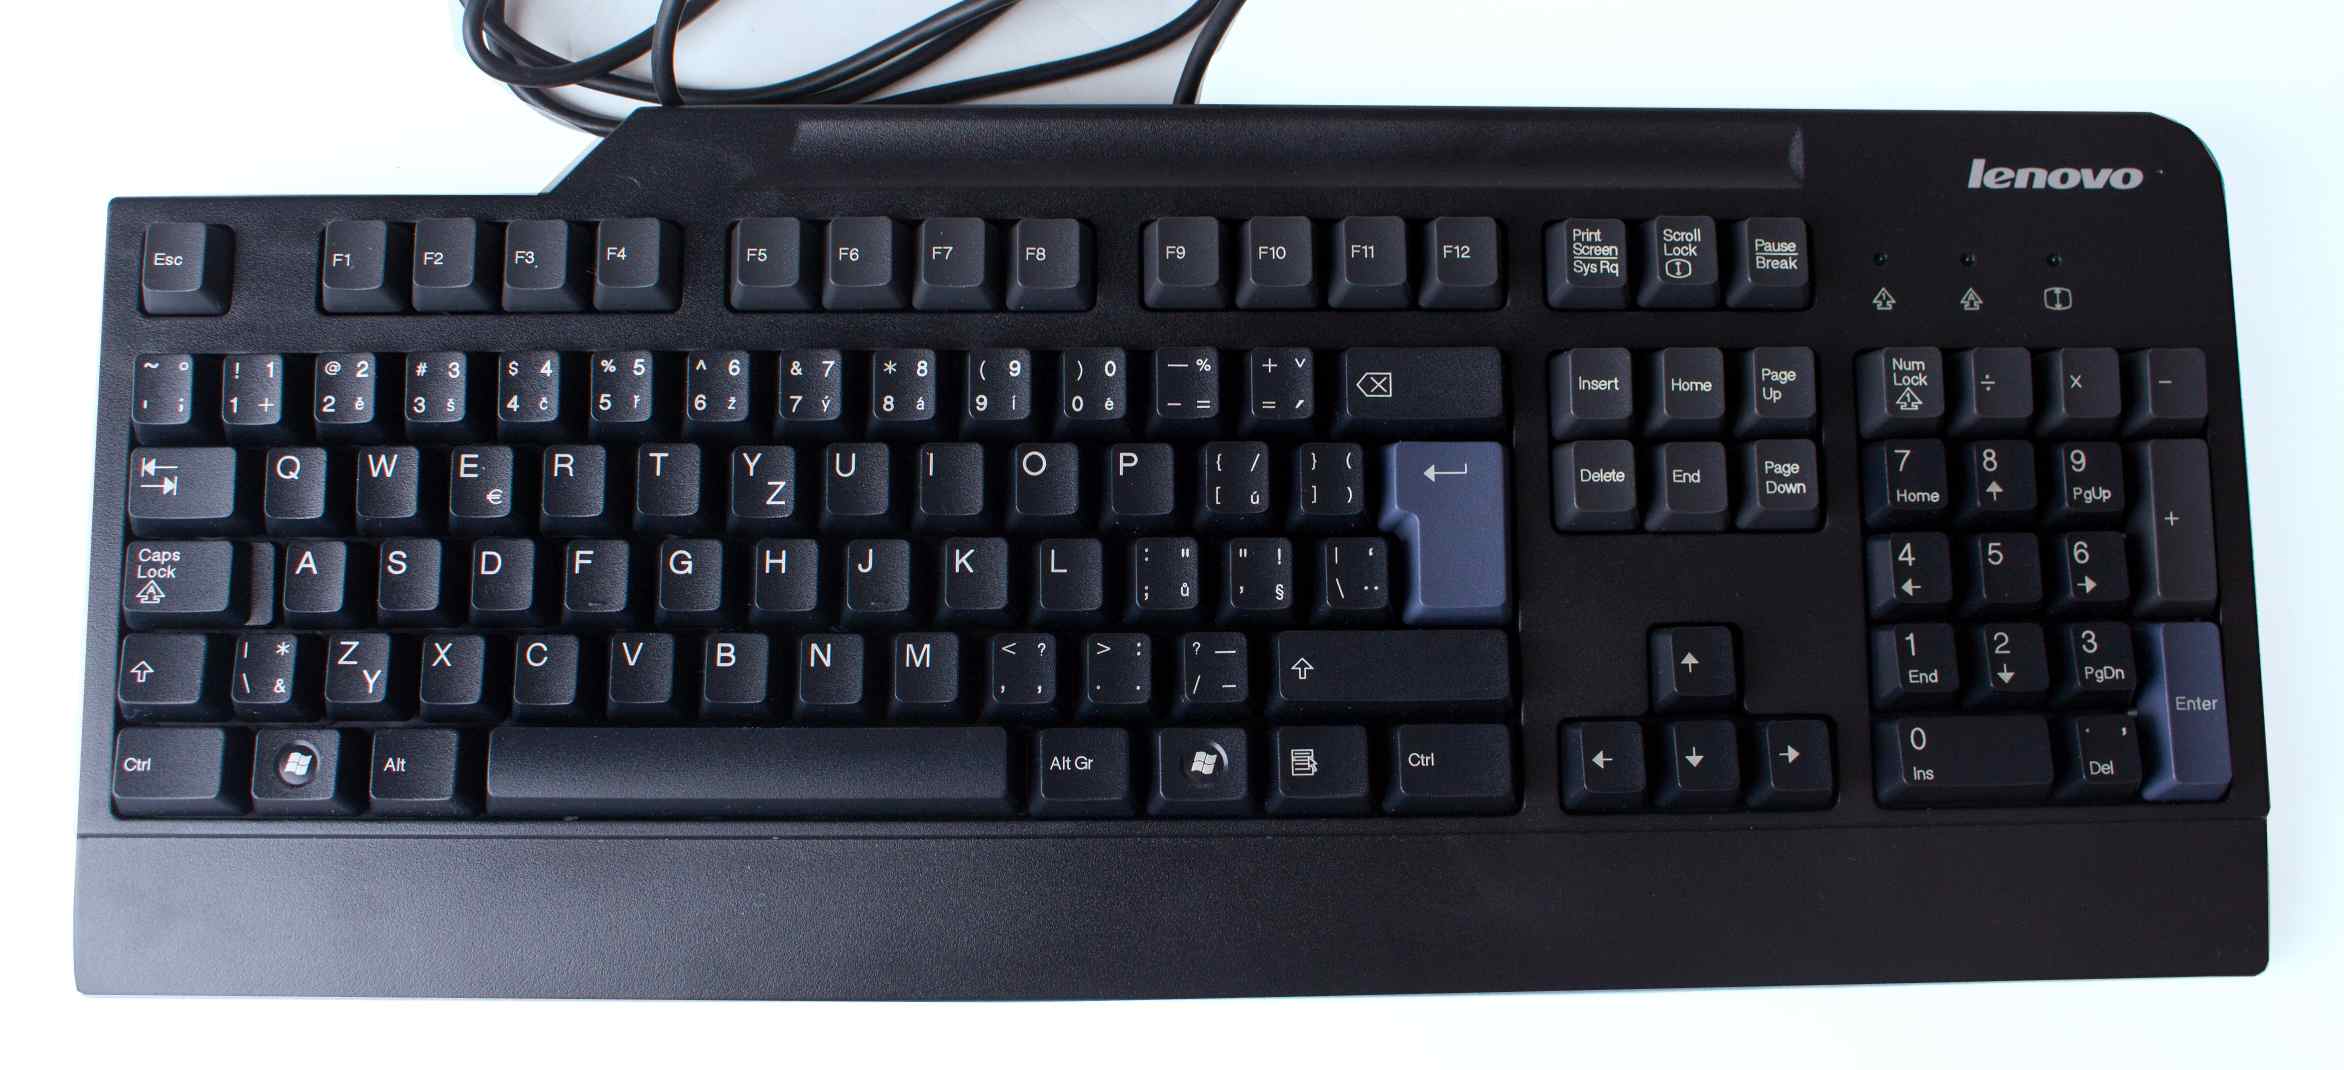 Klávesnice Lenovo SK-8825 / KB1021 USB Keyboard